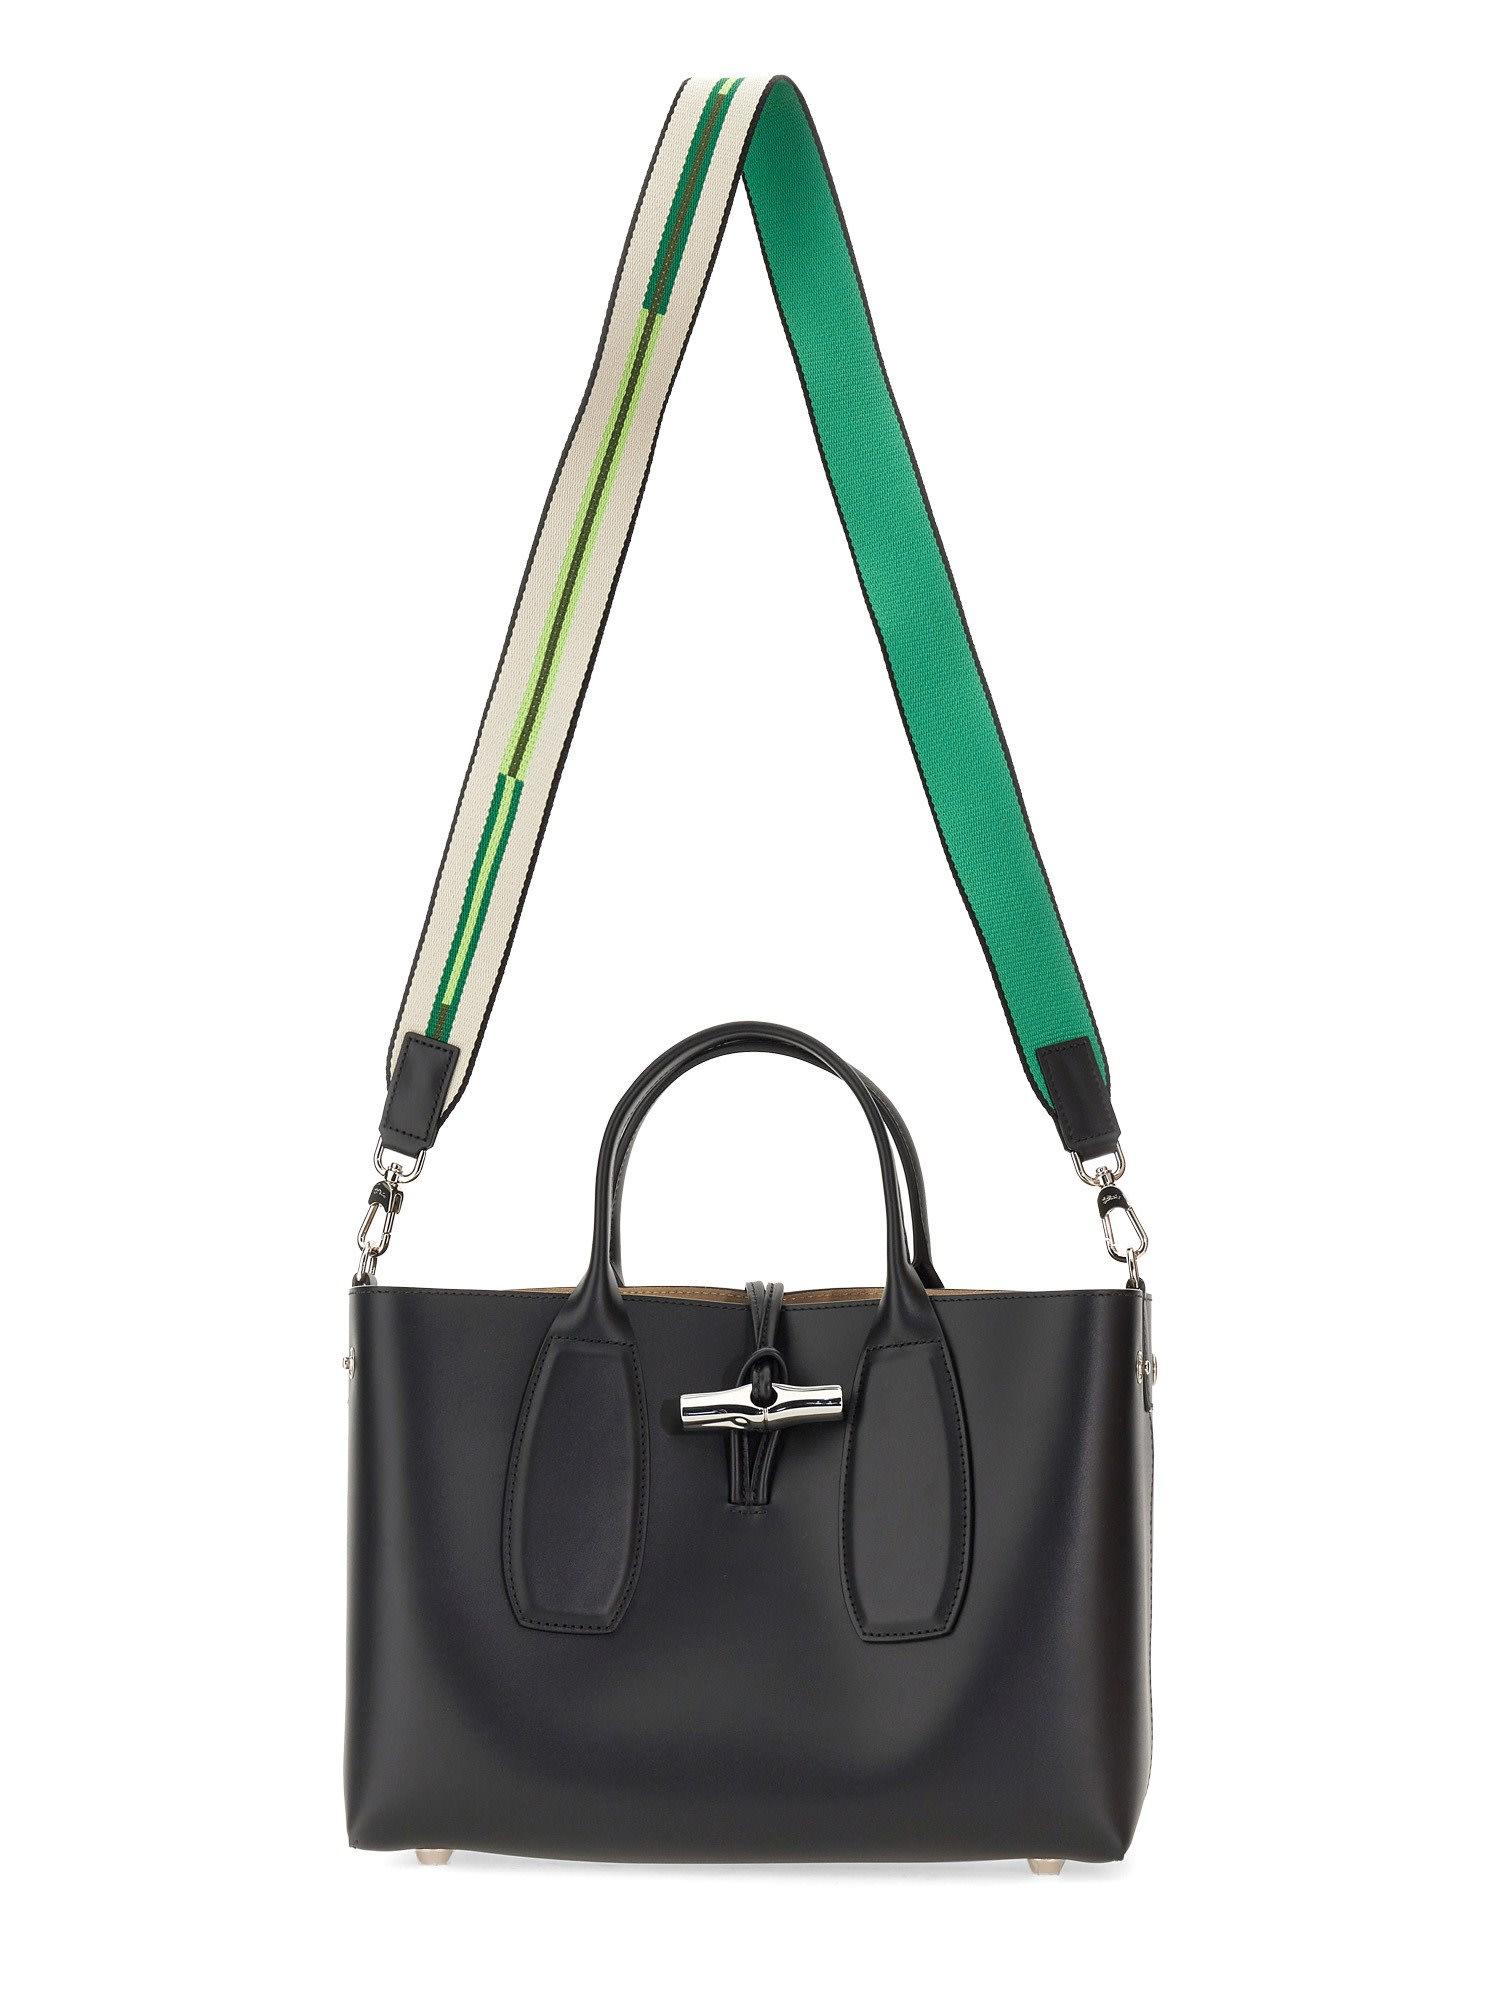 Longchamp Medium Roseau Bag in Black